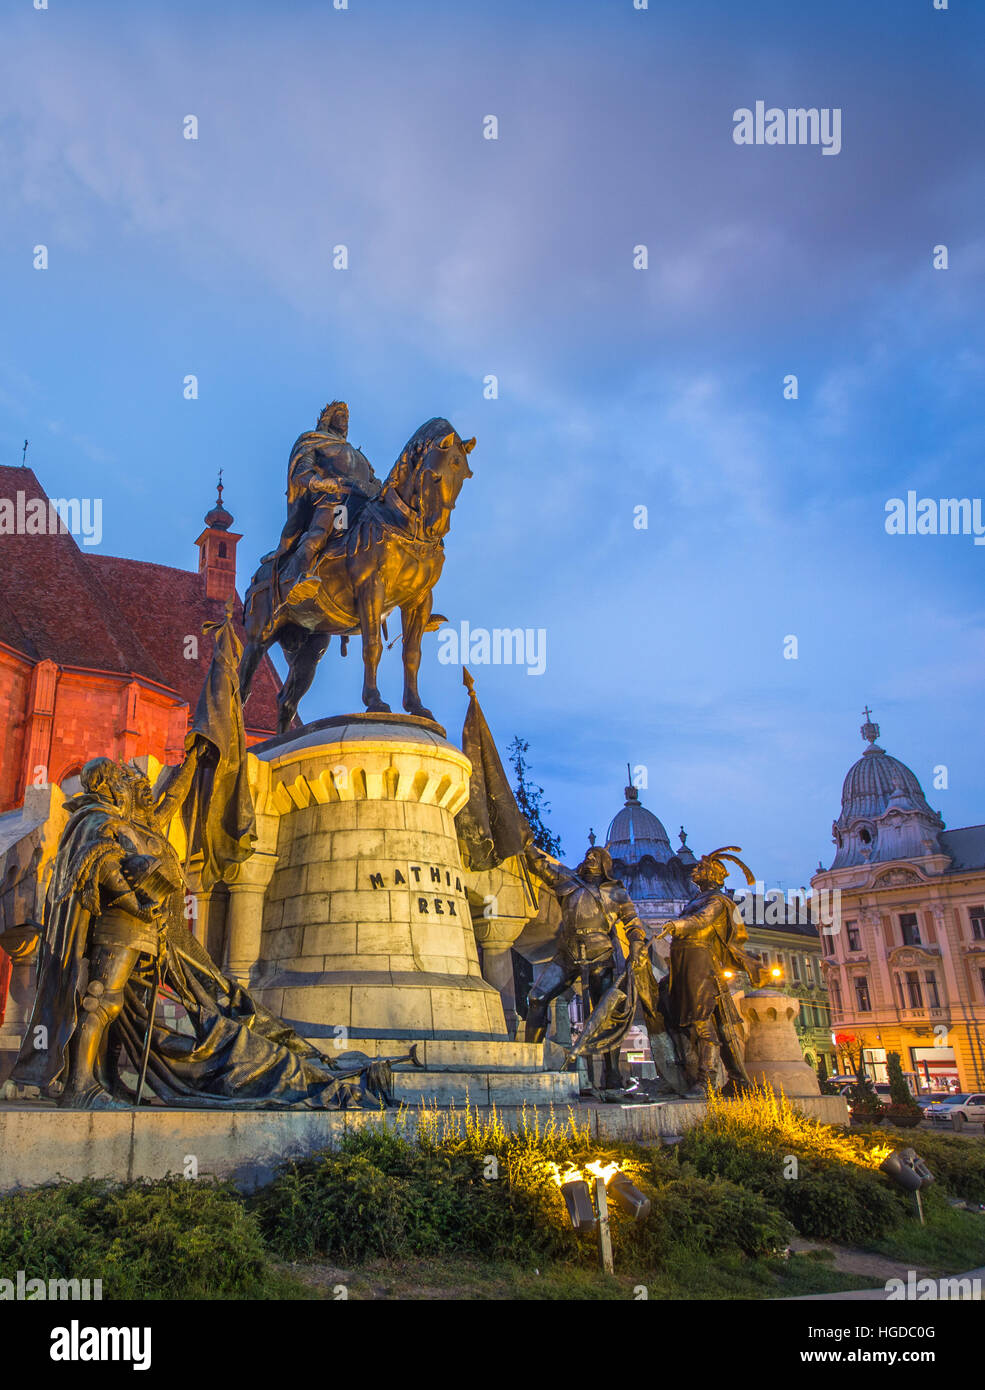 Rumania, Transylvania Cluj Napoca Ciudad, Mathia Rex Monumento, Iglesia de San Miguel, Plaza Unirii Foto de stock